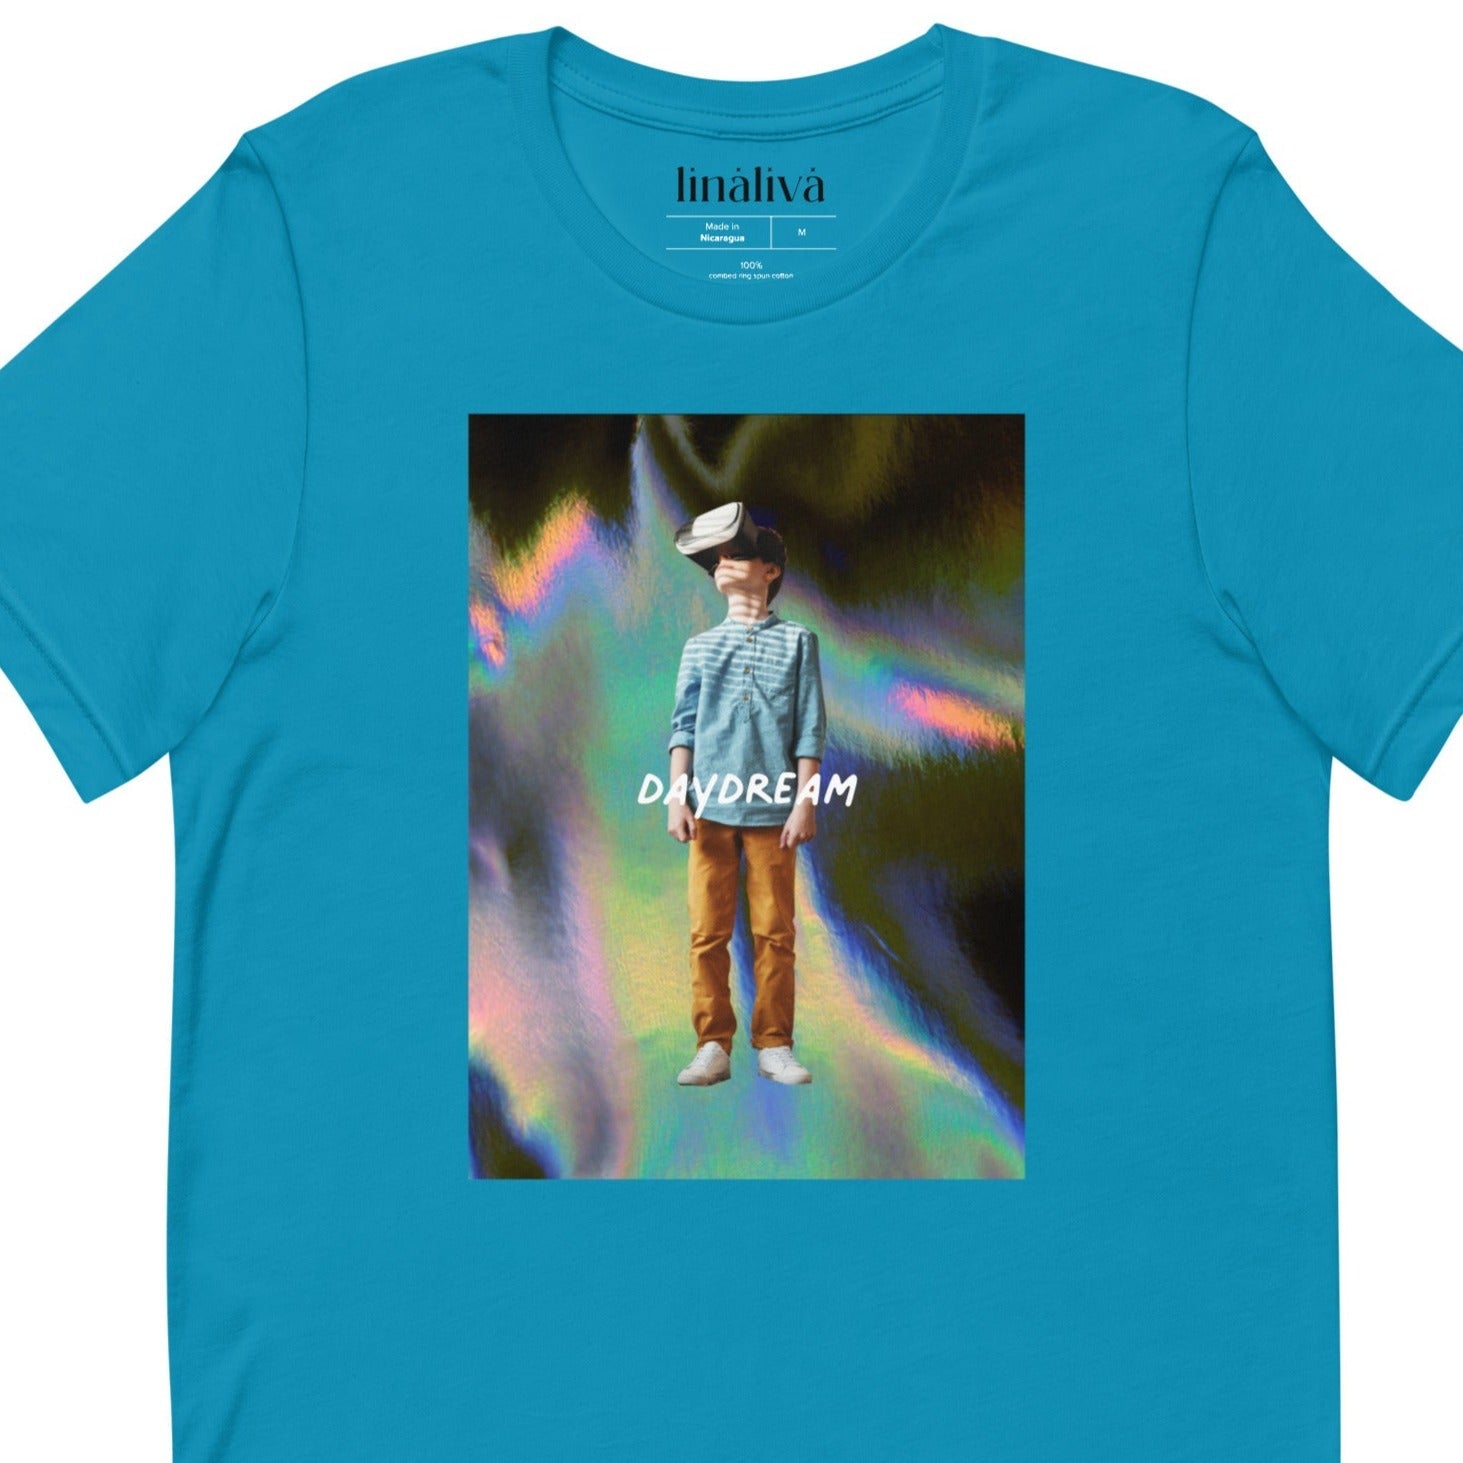 Daydream - T-Shirt - Unisex-Unisex T-Shirts-Aqua-linaliva.de